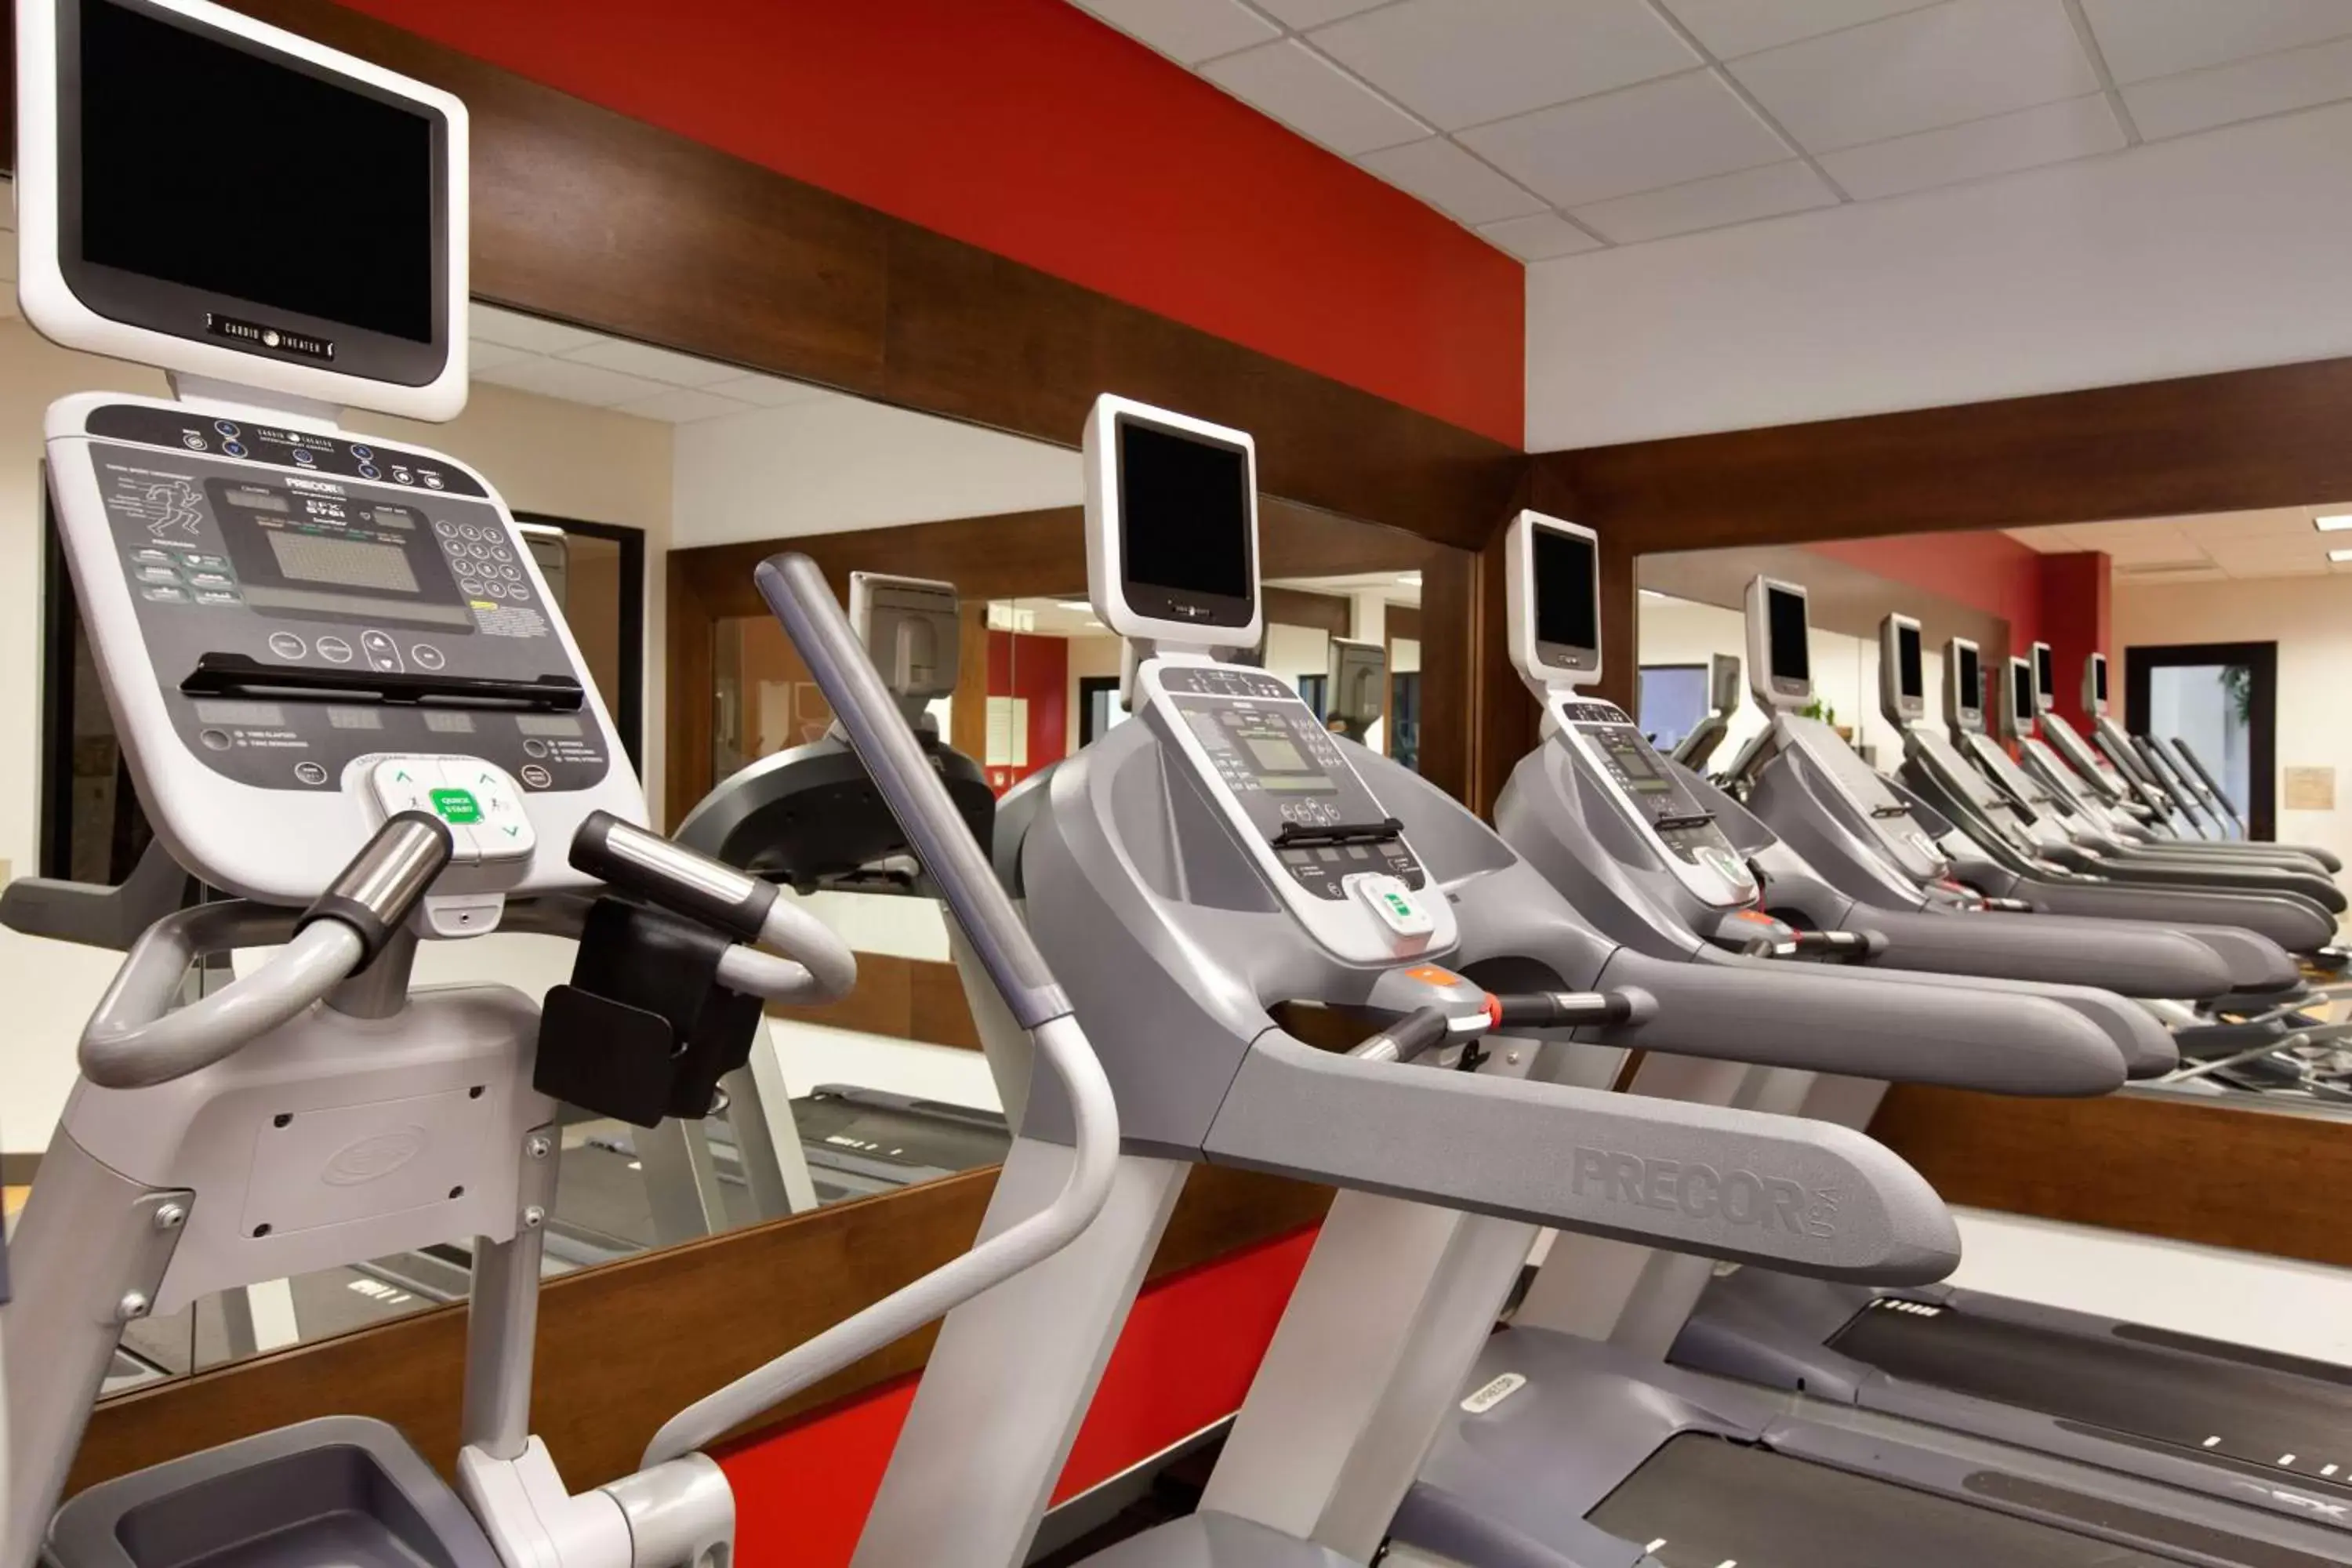 Fitness centre/facilities, Fitness Center/Facilities in Embassy Suites La Quinta Hotel & Spa